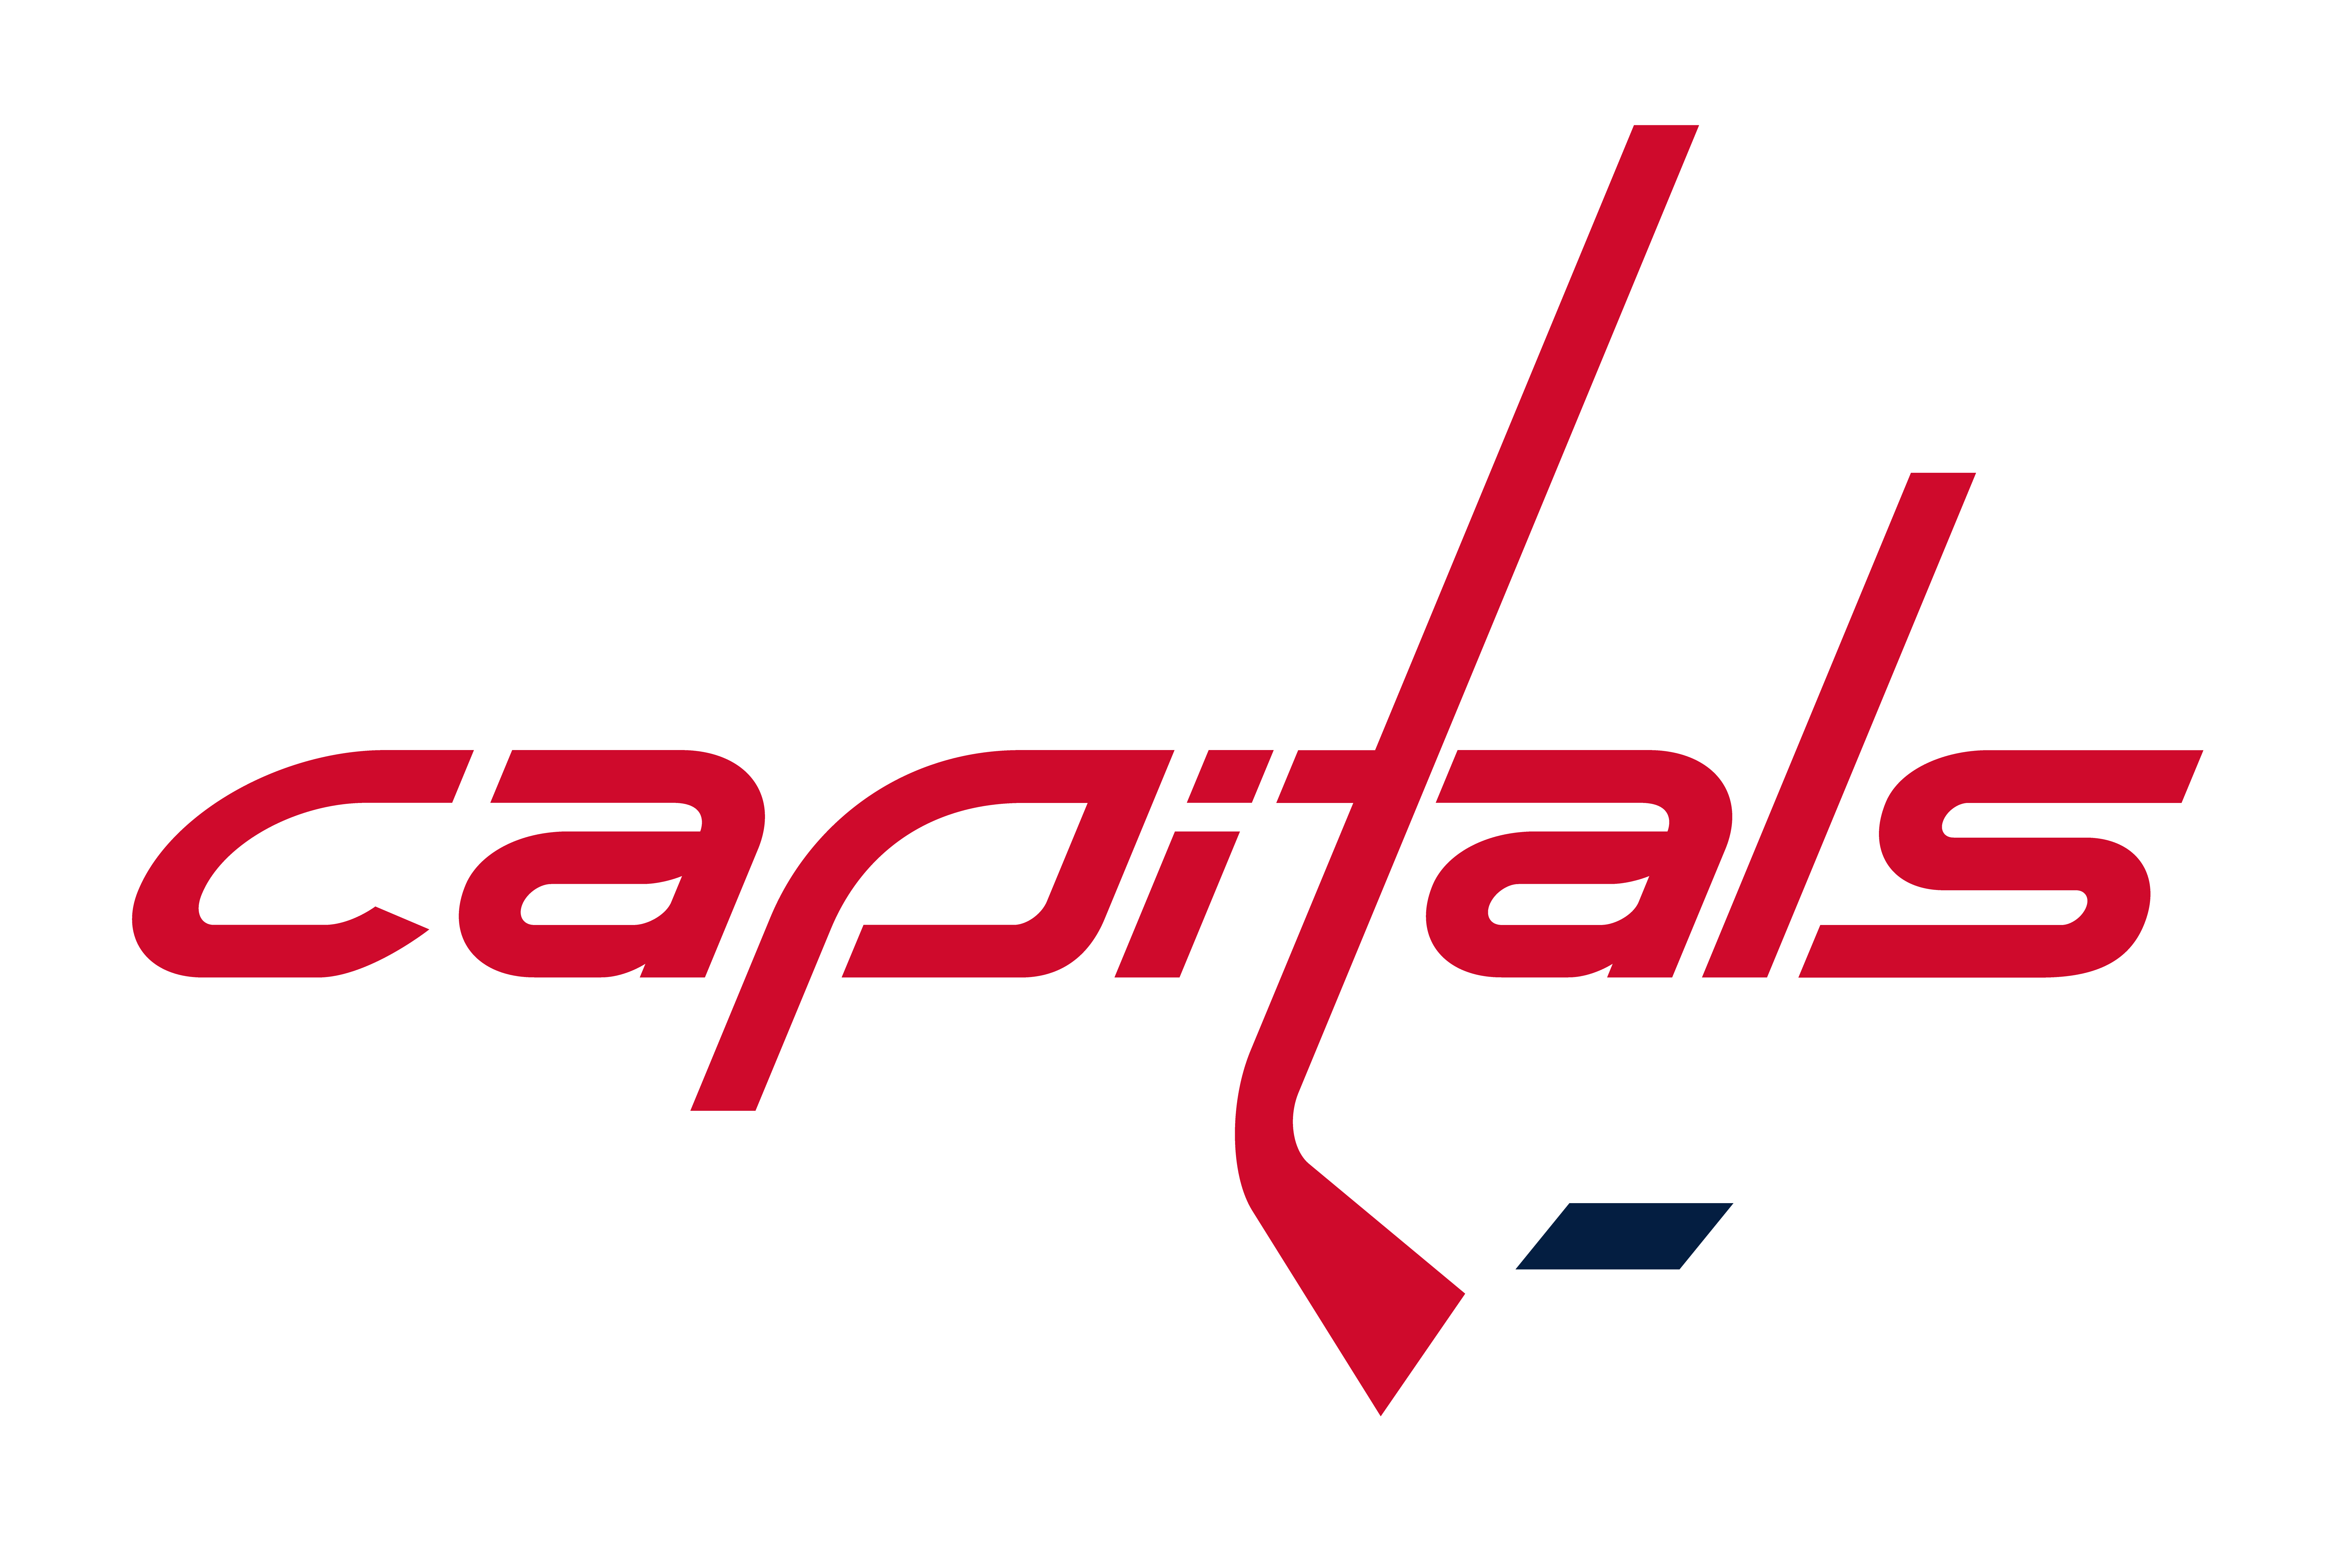 Washington Capitals 8k Ultra HD Wallpaper. Background Image